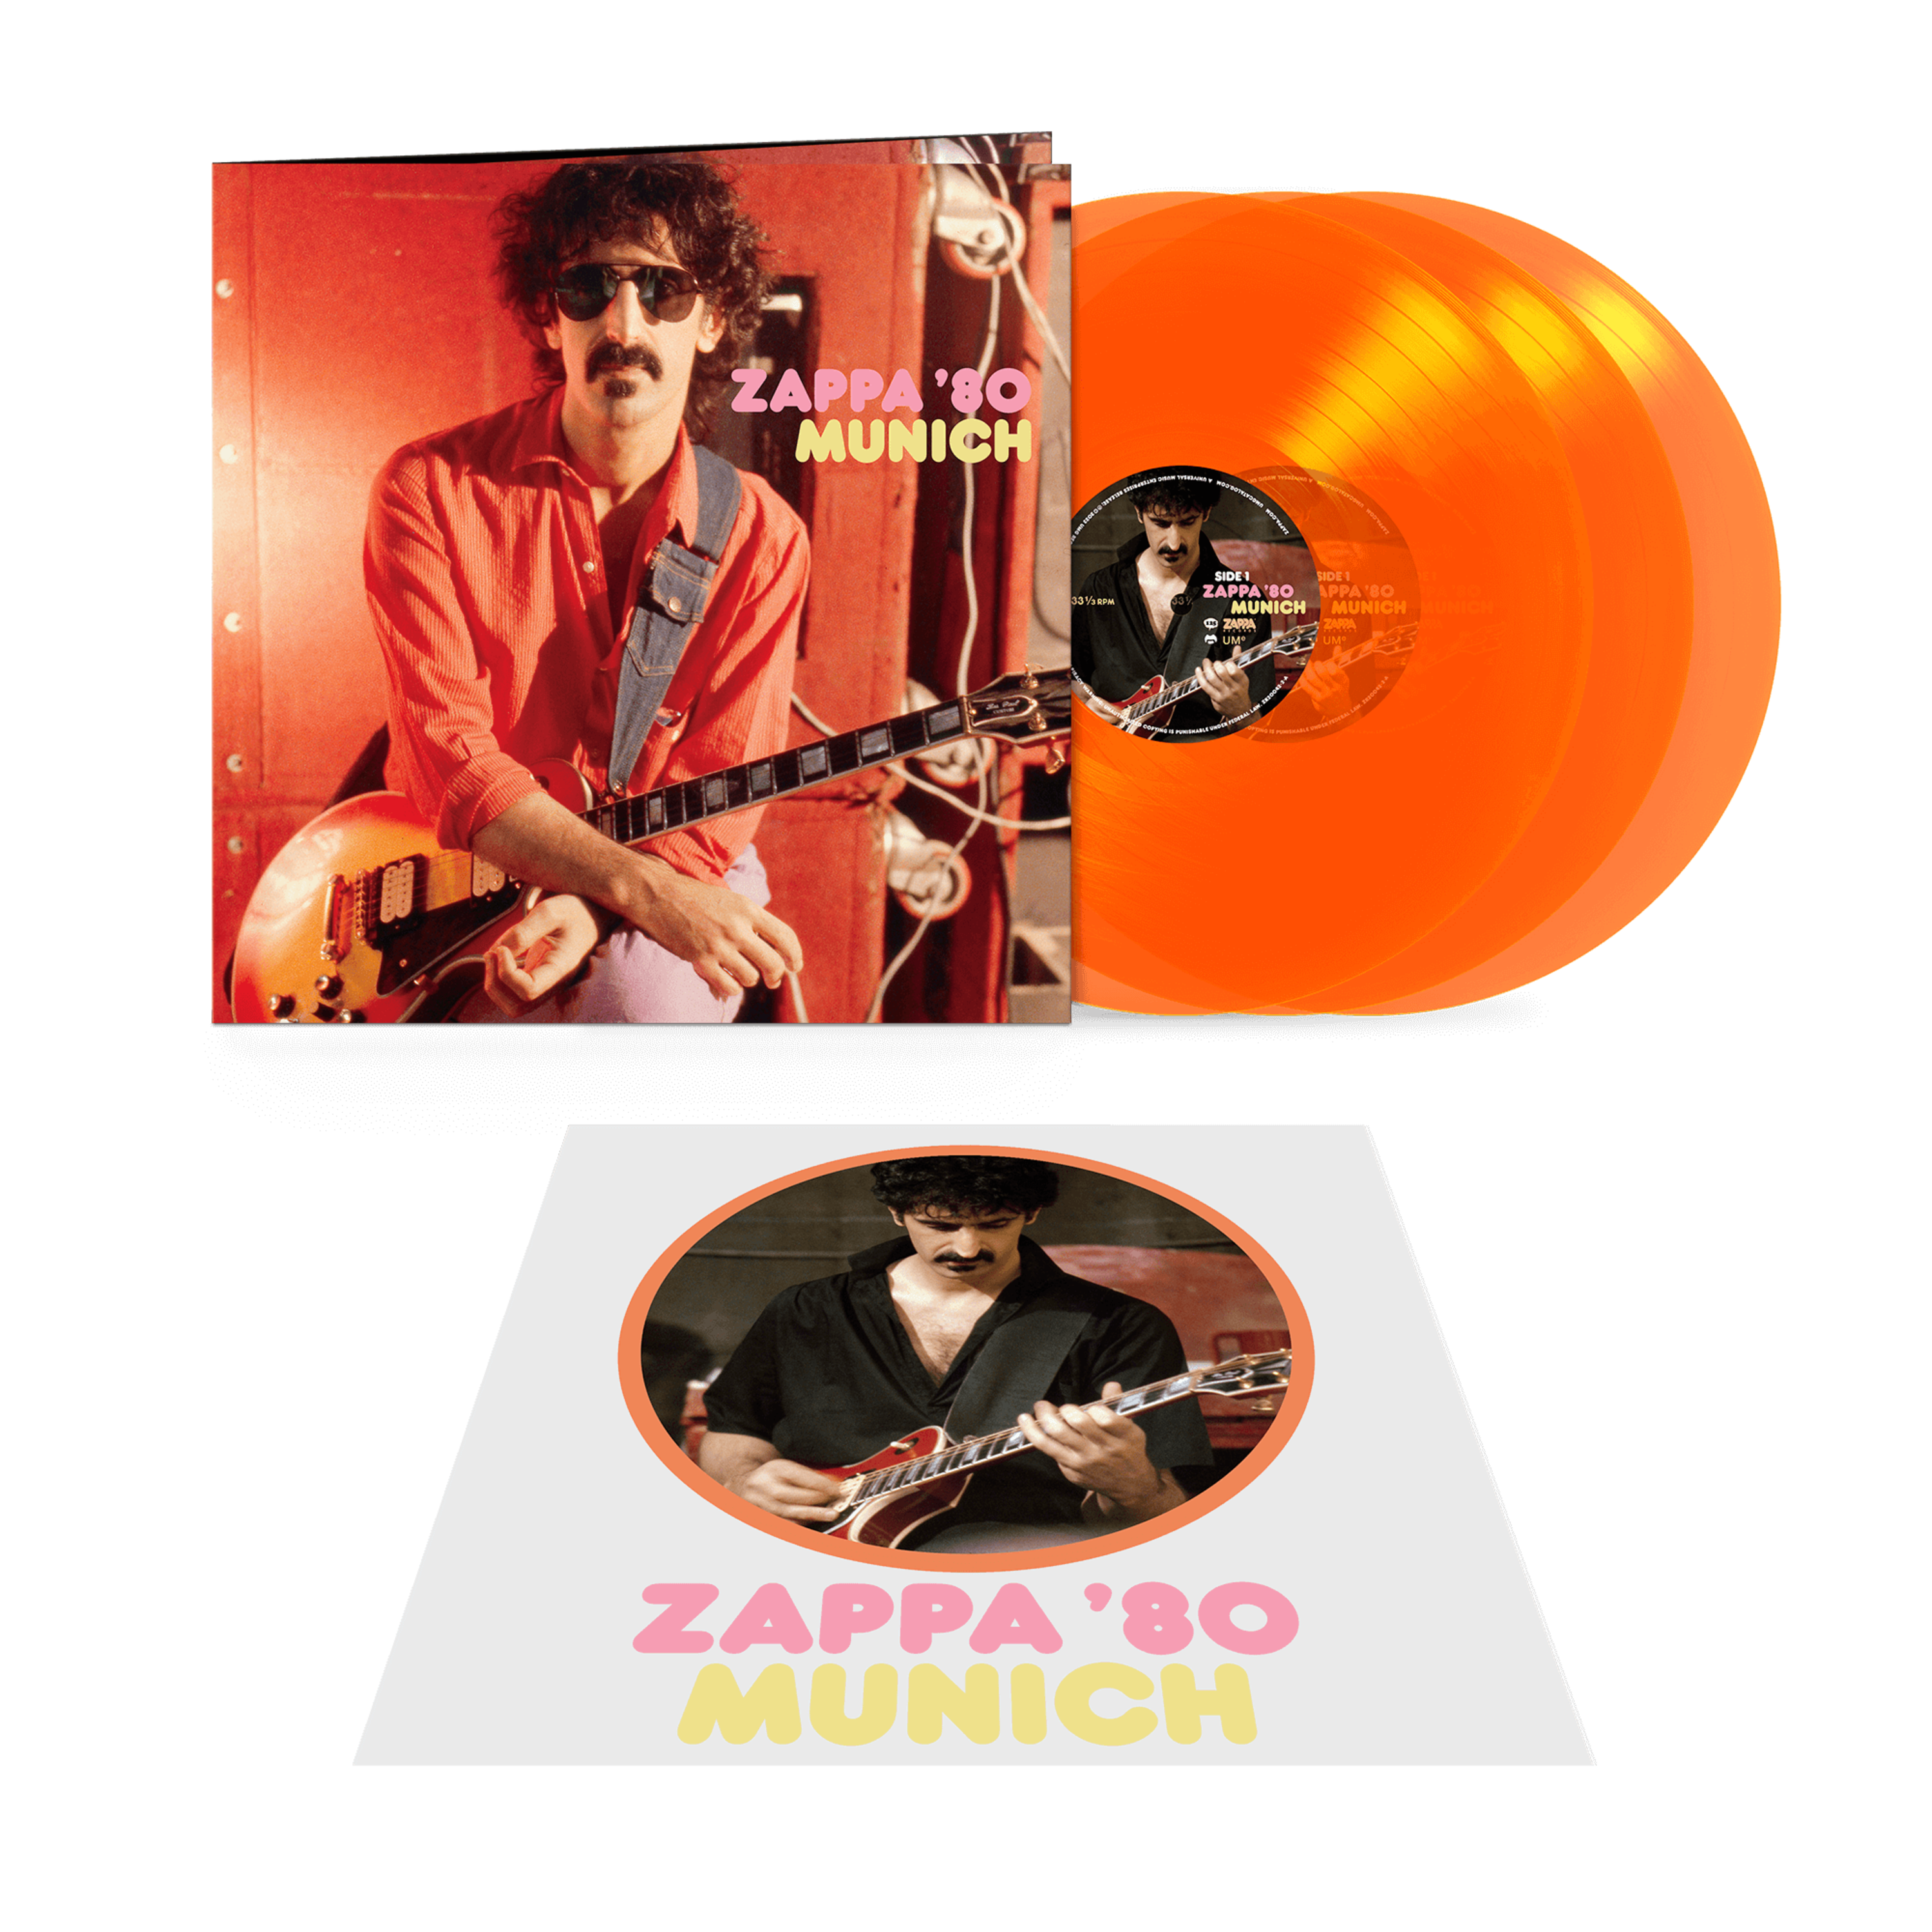 Frank Zappa - Zappa 